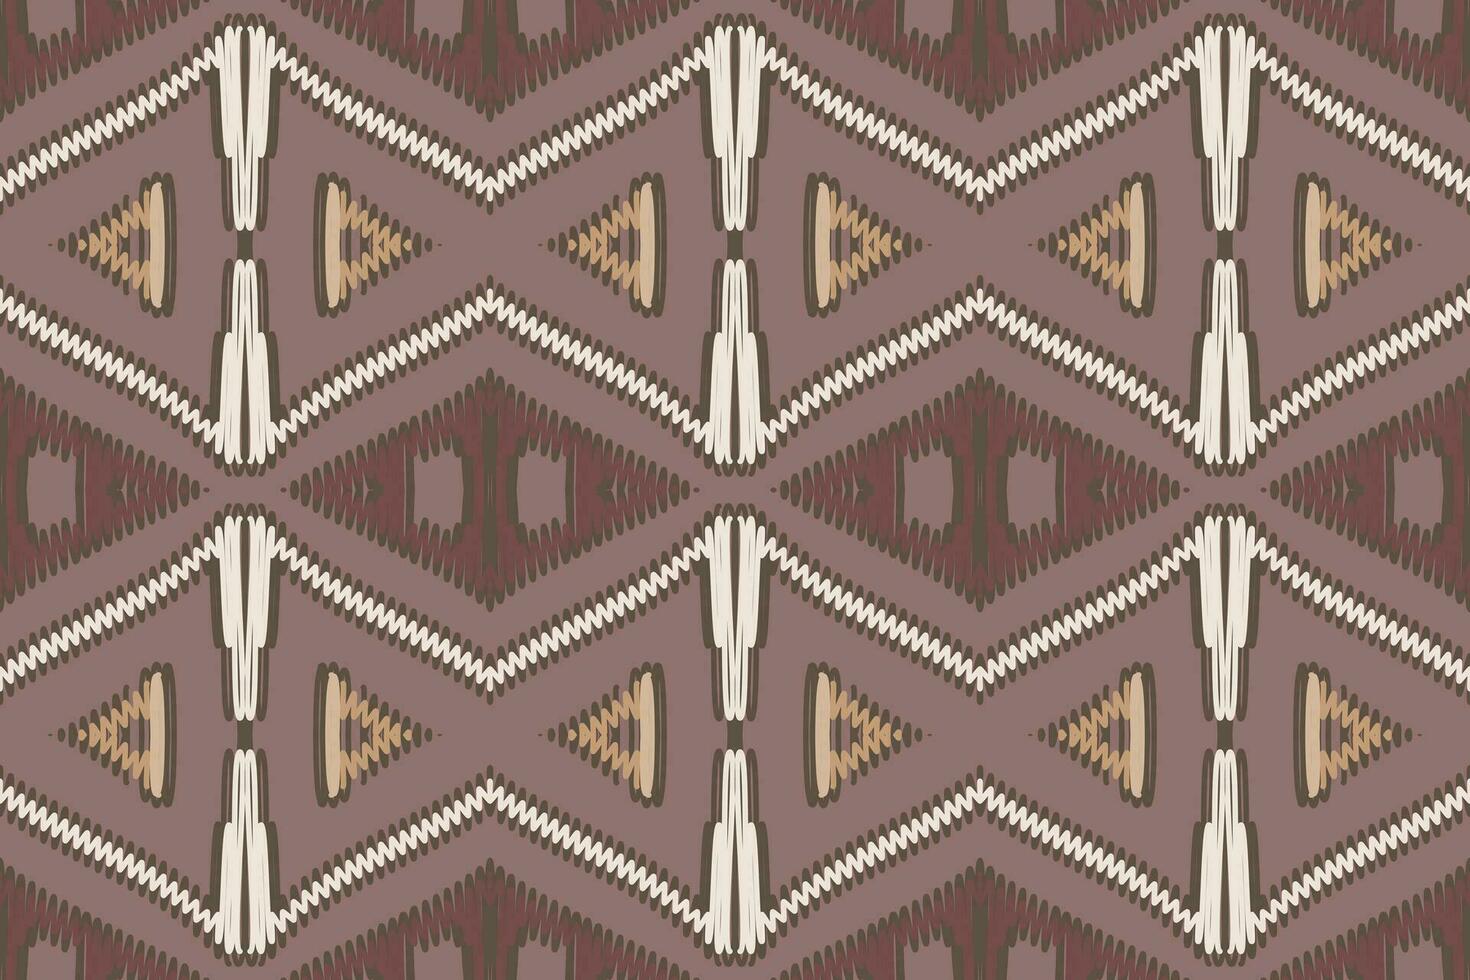 patchwork mönster sömlös australier ursprunglig mönster motiv broderi, ikat broderi vektor design för skriva ut indonesiska batik motiv broderi inföding amerikan kurta mughal design